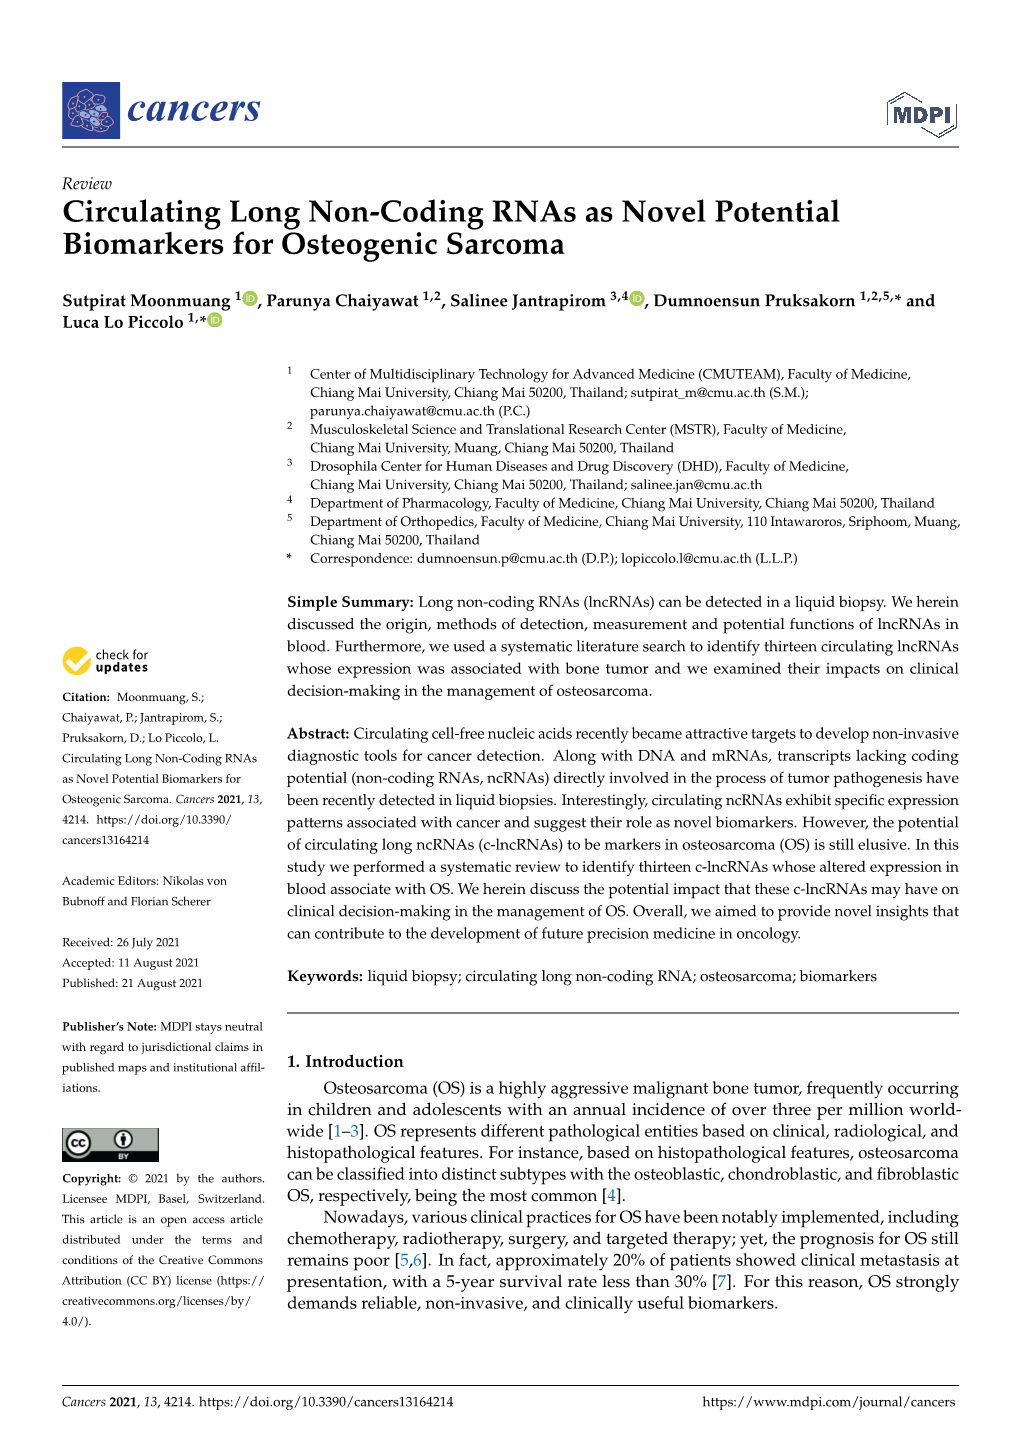 Circulating Long Non-Coding Rnas As Novel Potential Biomarkers for Osteogenic Sarcoma